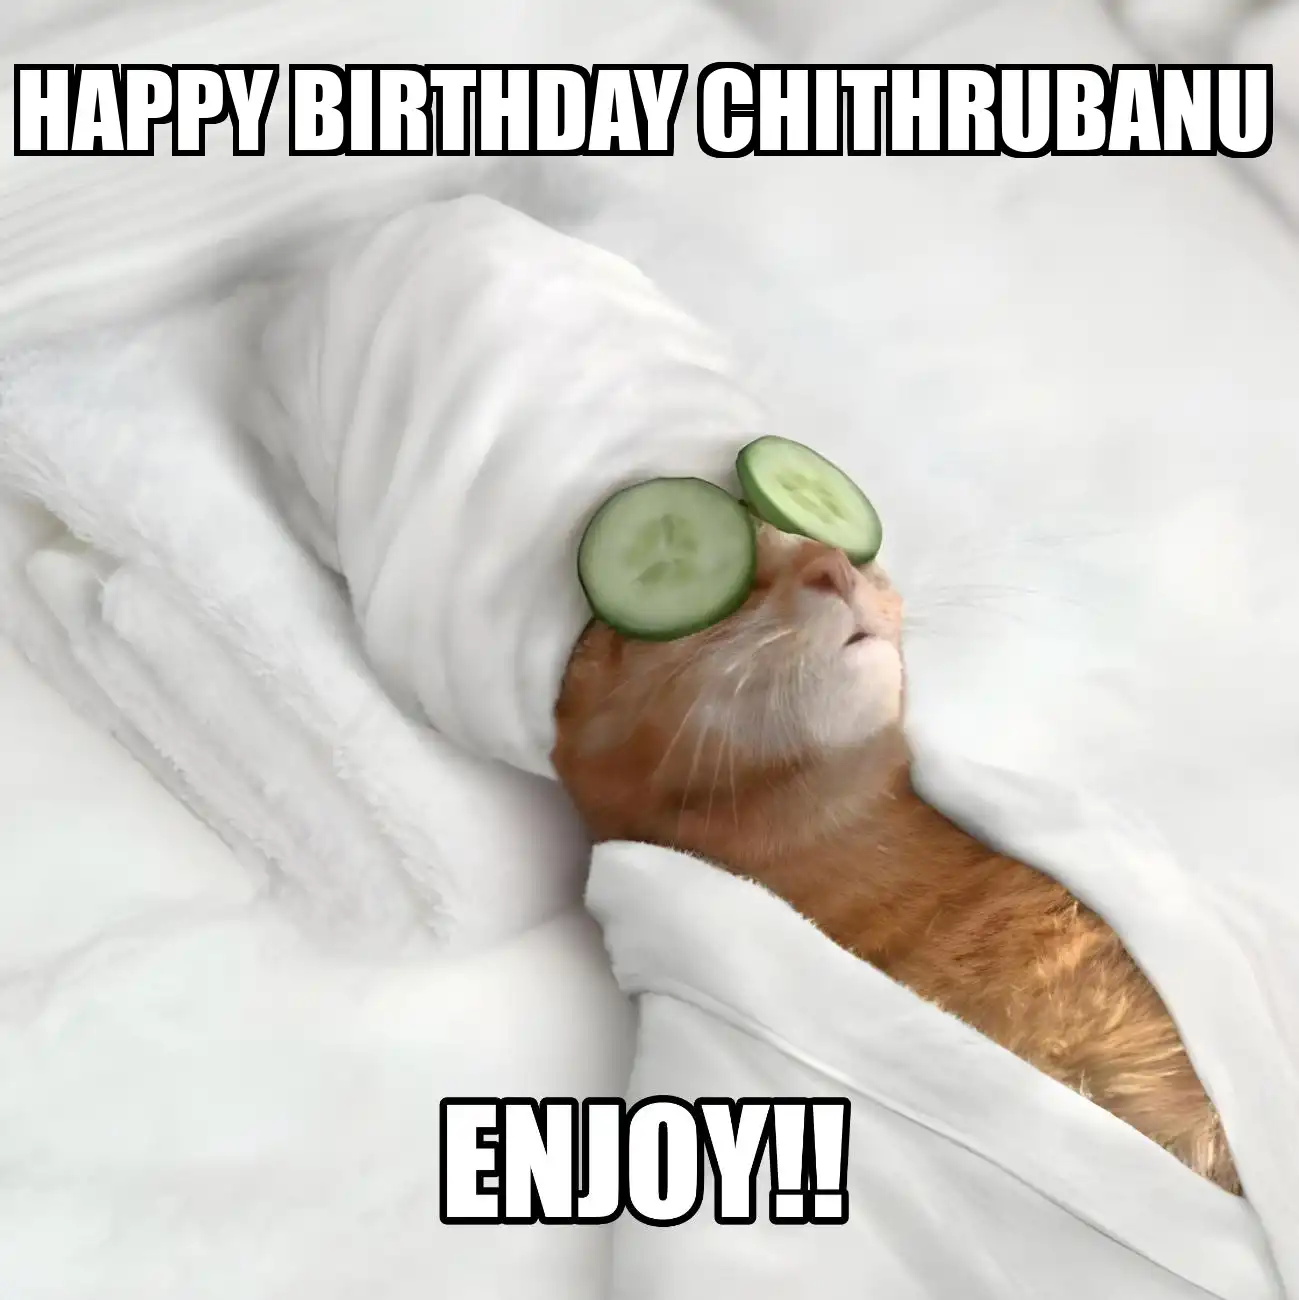 Happy Birthday Chithrubanu Enjoy Cat Meme